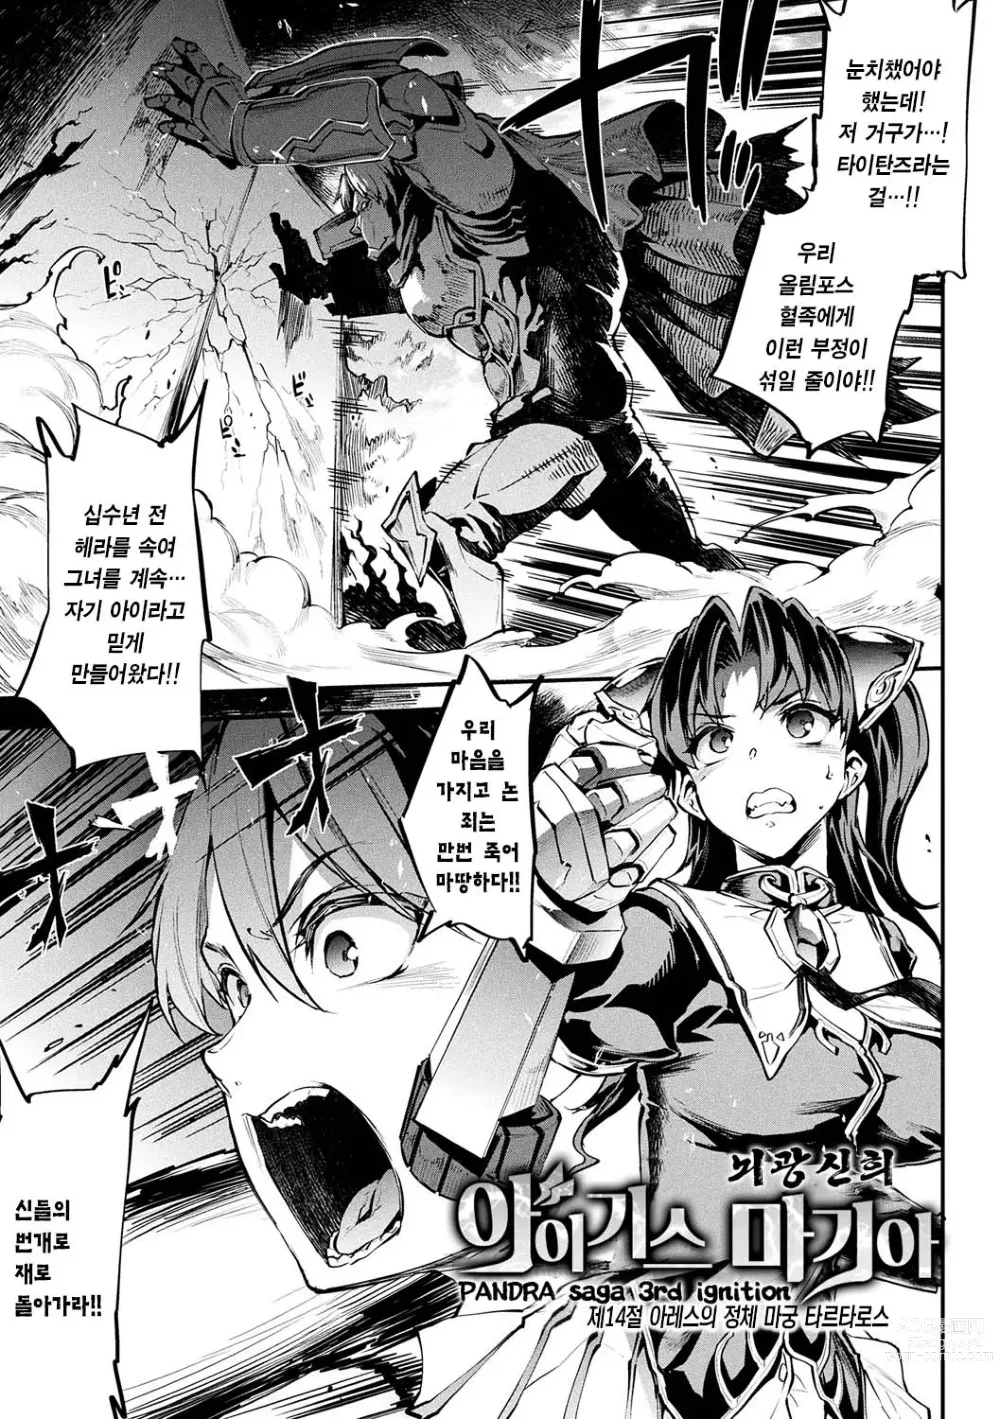 Page 1 of manga 뇌광신희 아이기스 마기아 -PANDRA saga 3rd ignition- 제 15편